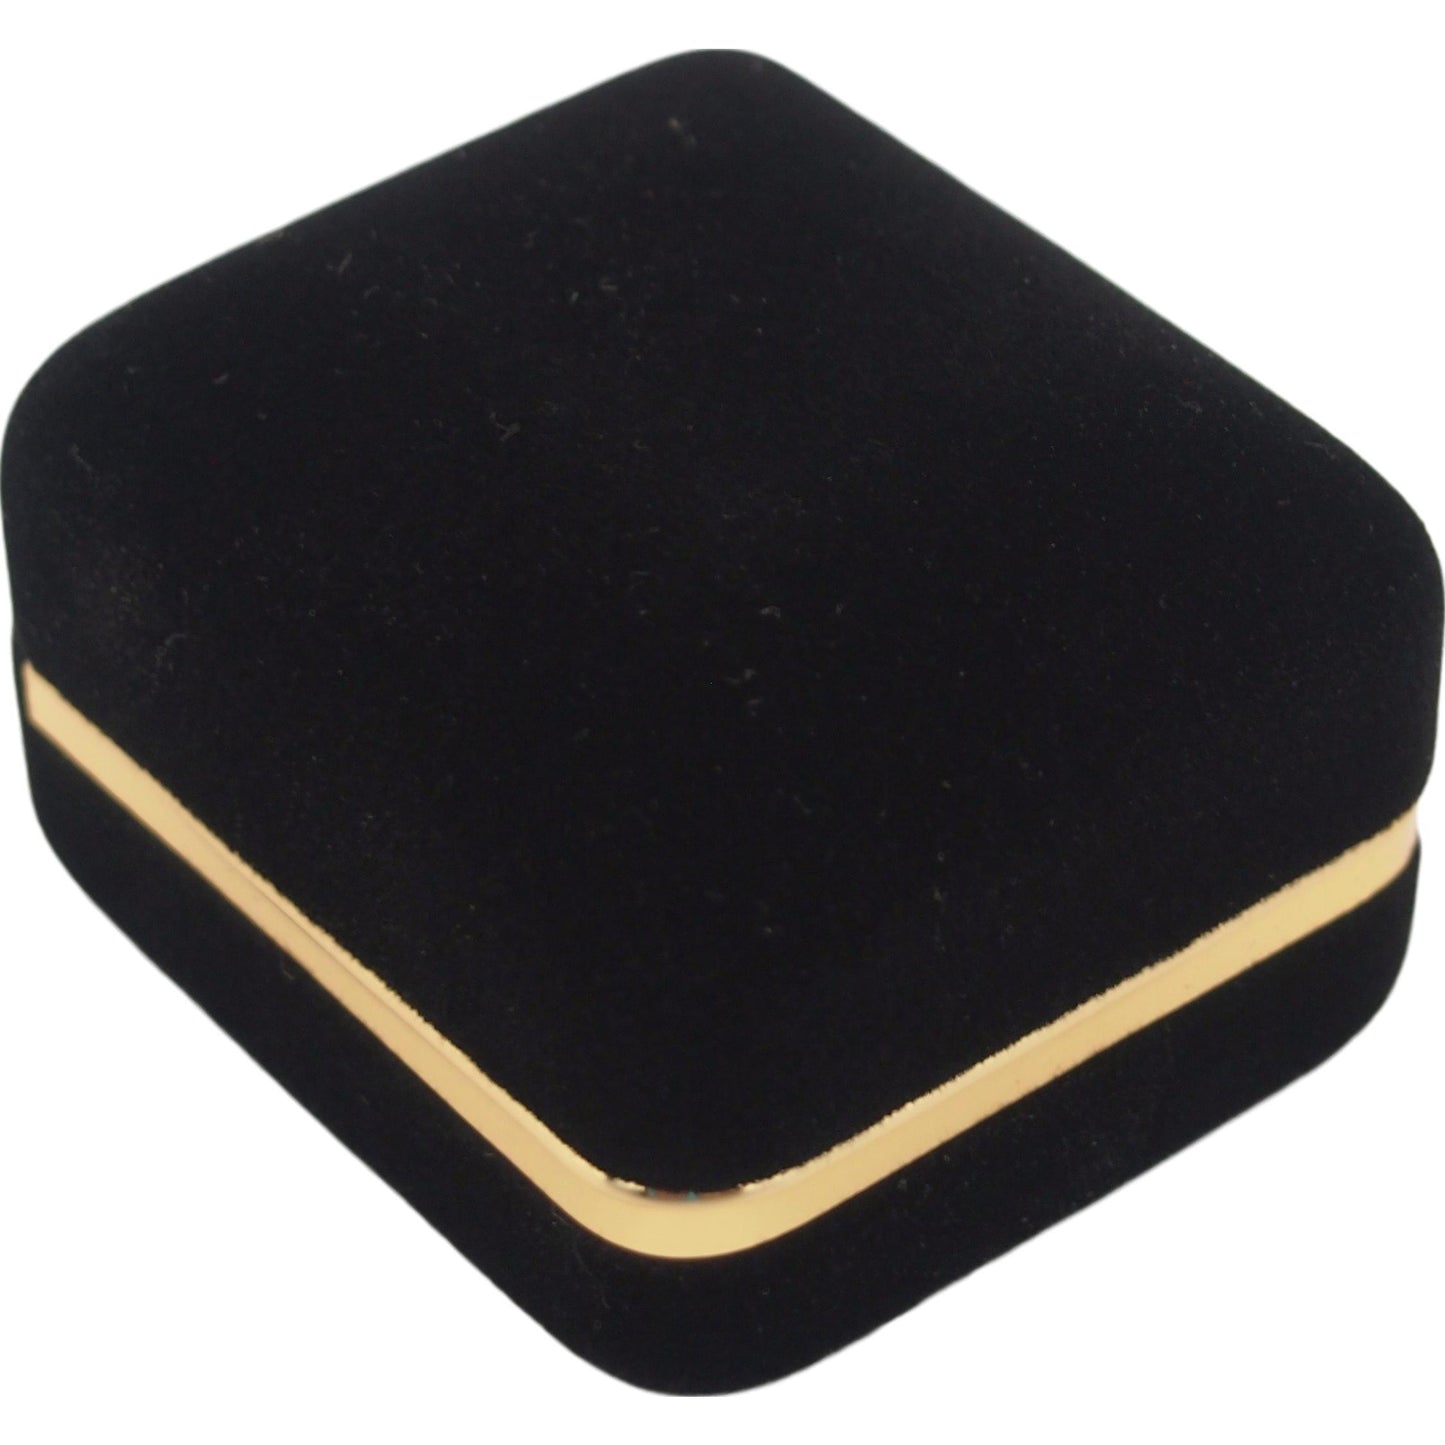 Black Velvet Ring Jewelry Gift Boxes with Brass Rim Showcase Display Kit